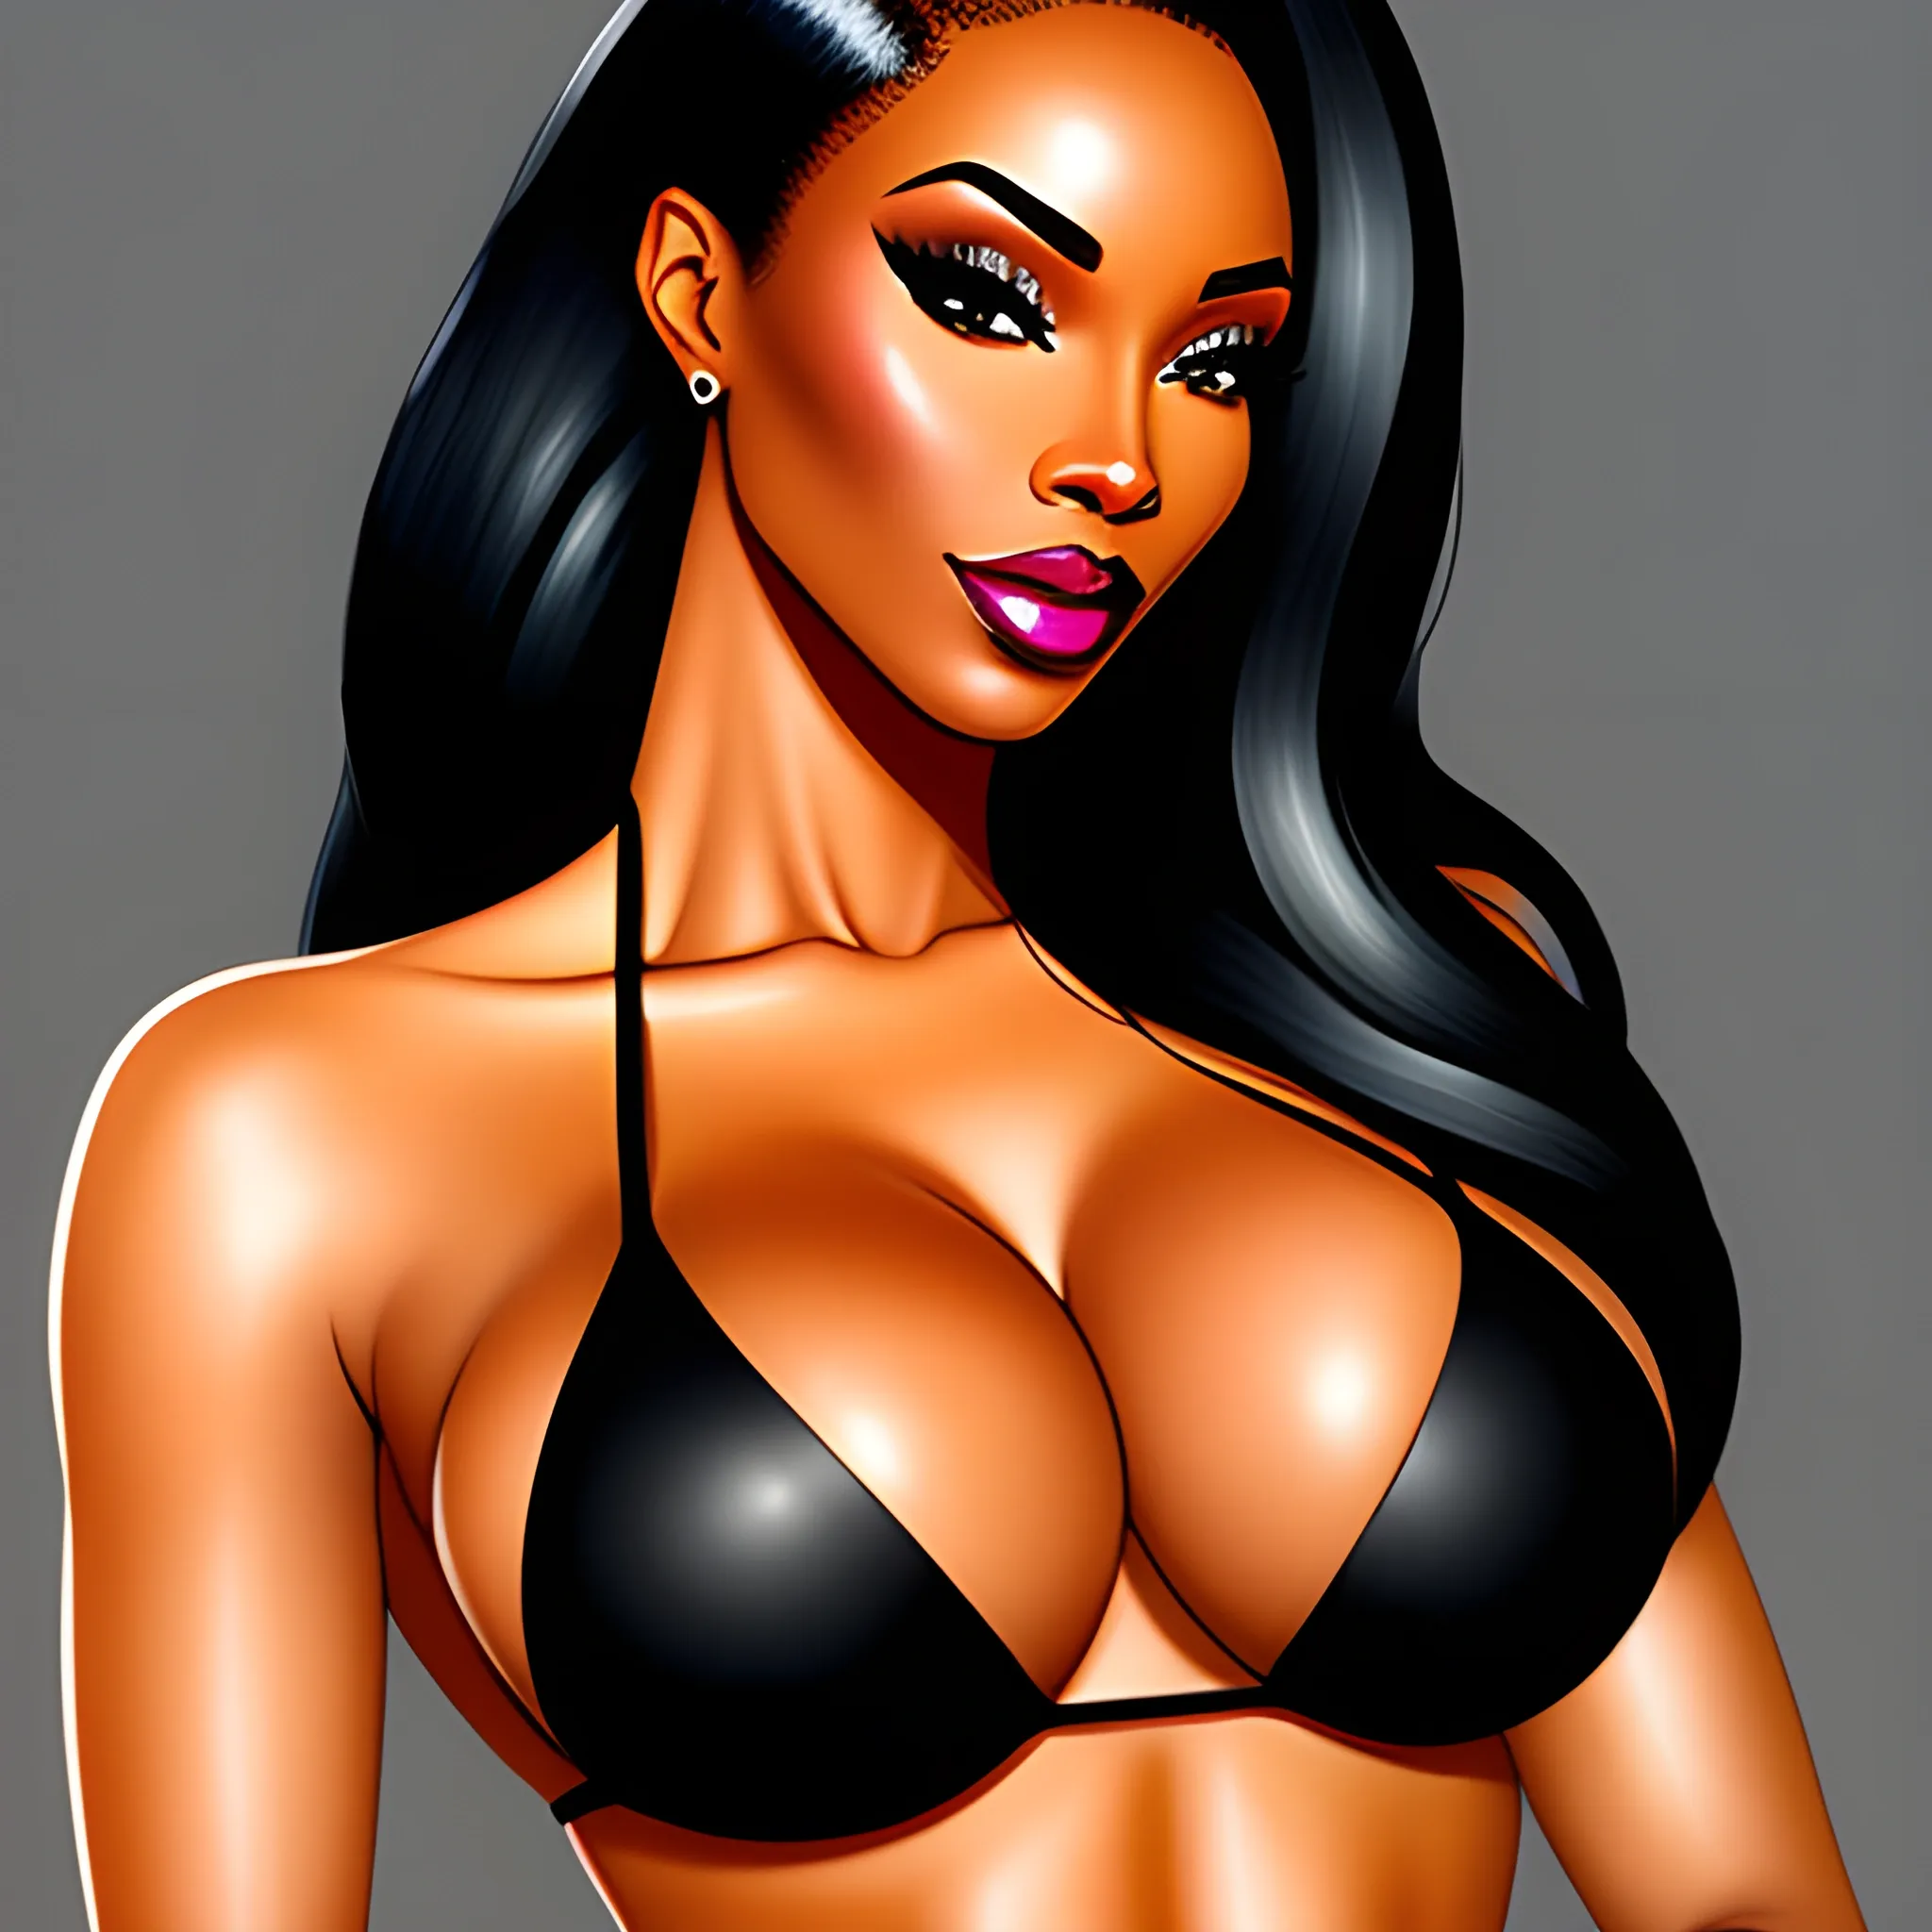 sexy black girl, bikini, sharp details, sharp focus, elegant, highly detailed, illustration, intricate, beautiful